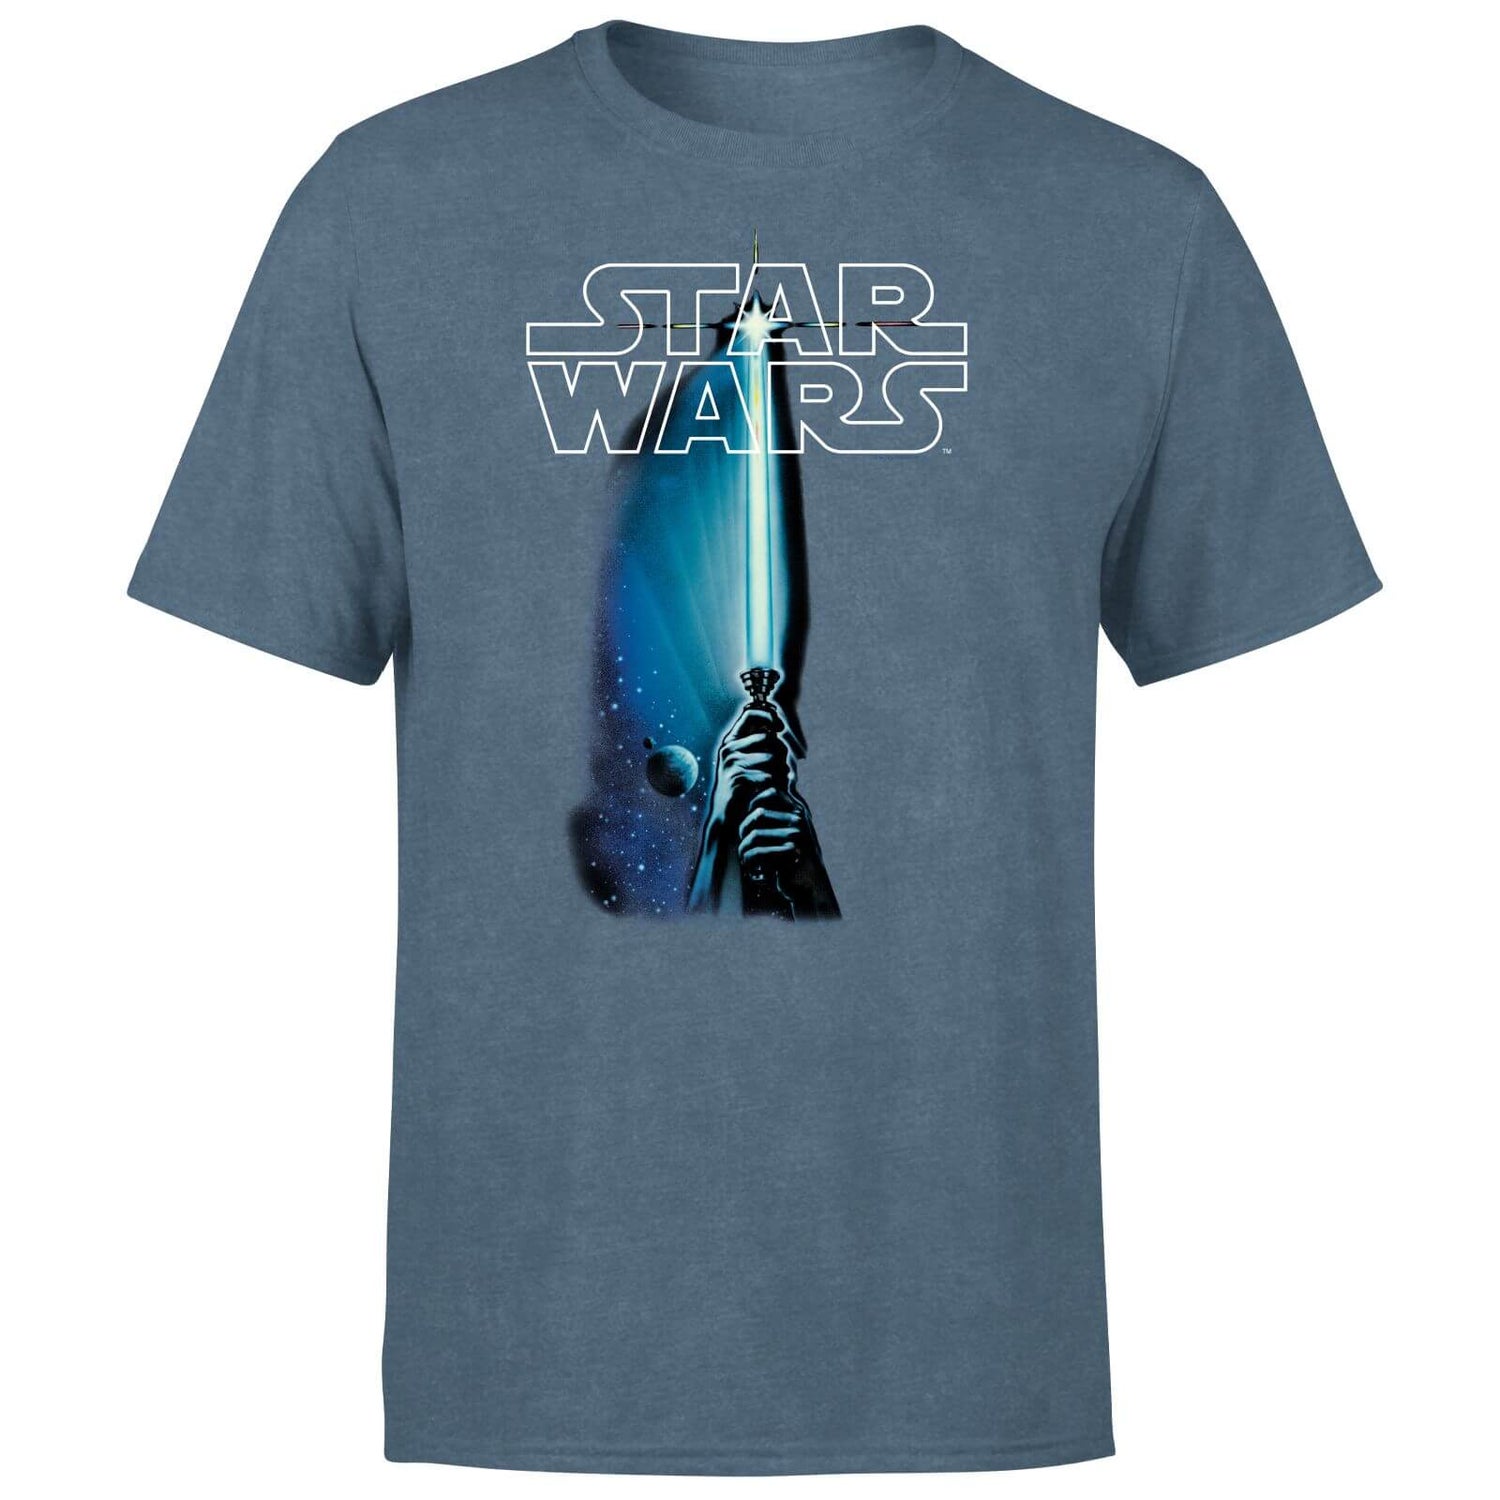 Star Wars Classic Lightsaber Men's T-Shirt - Navy Acid Wash